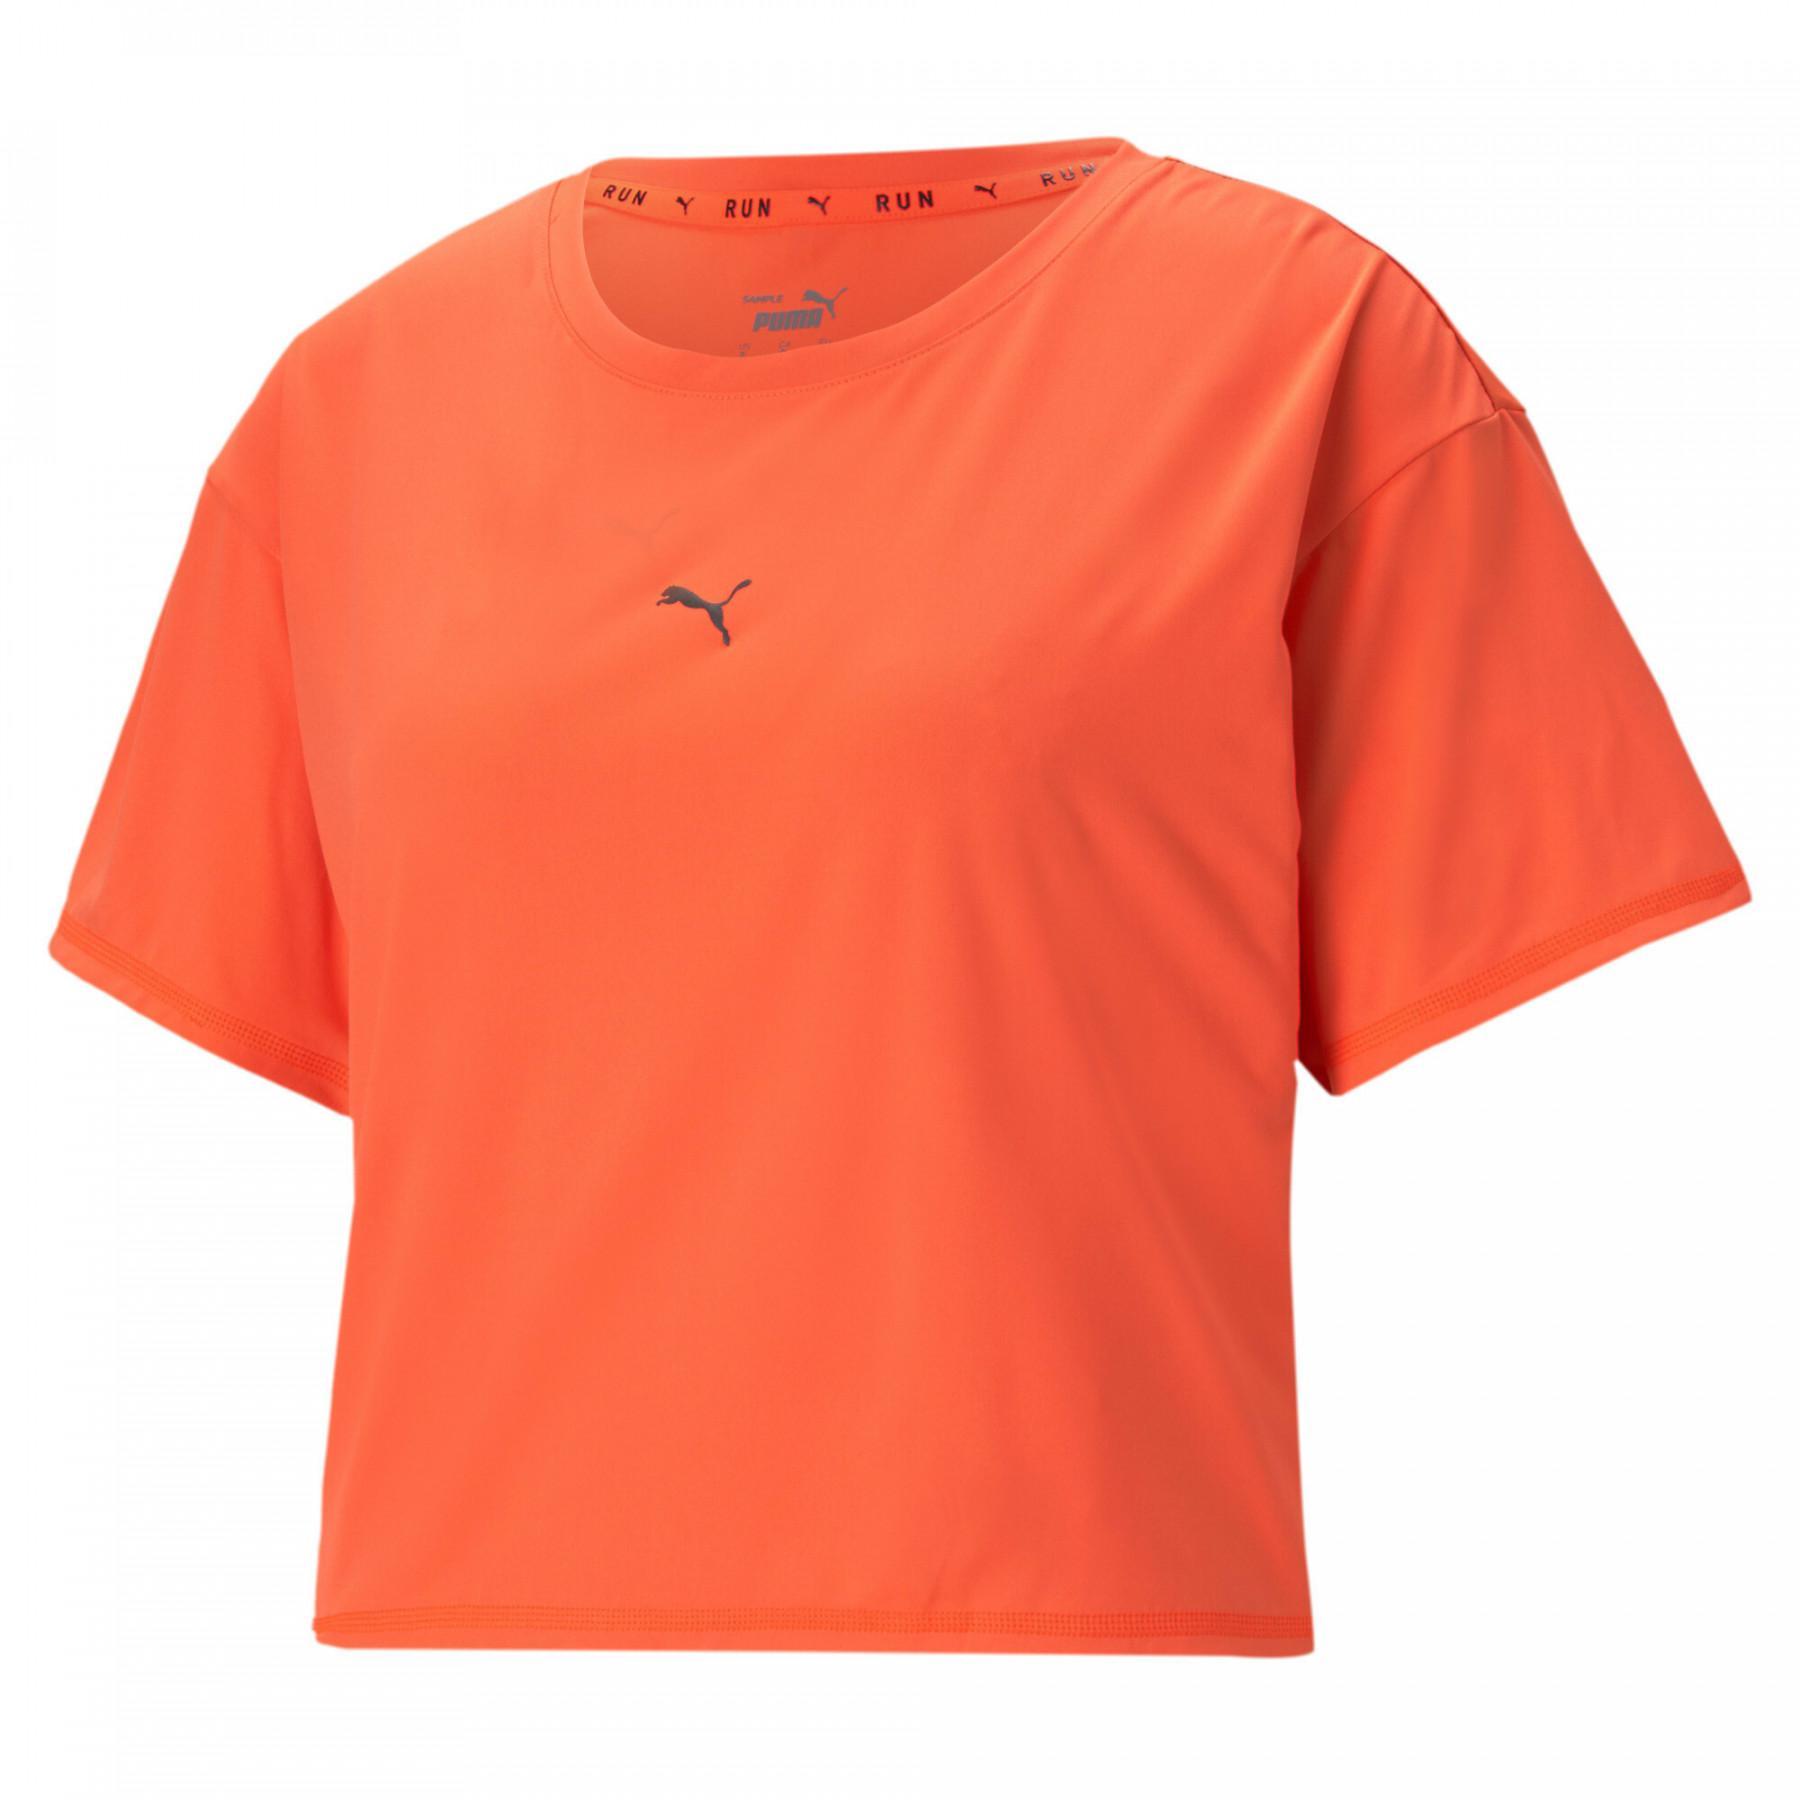 Woman\'s T-shirt Puma Run Launch Adapt Textile polos Handball - - wear Cool - T-shirts and